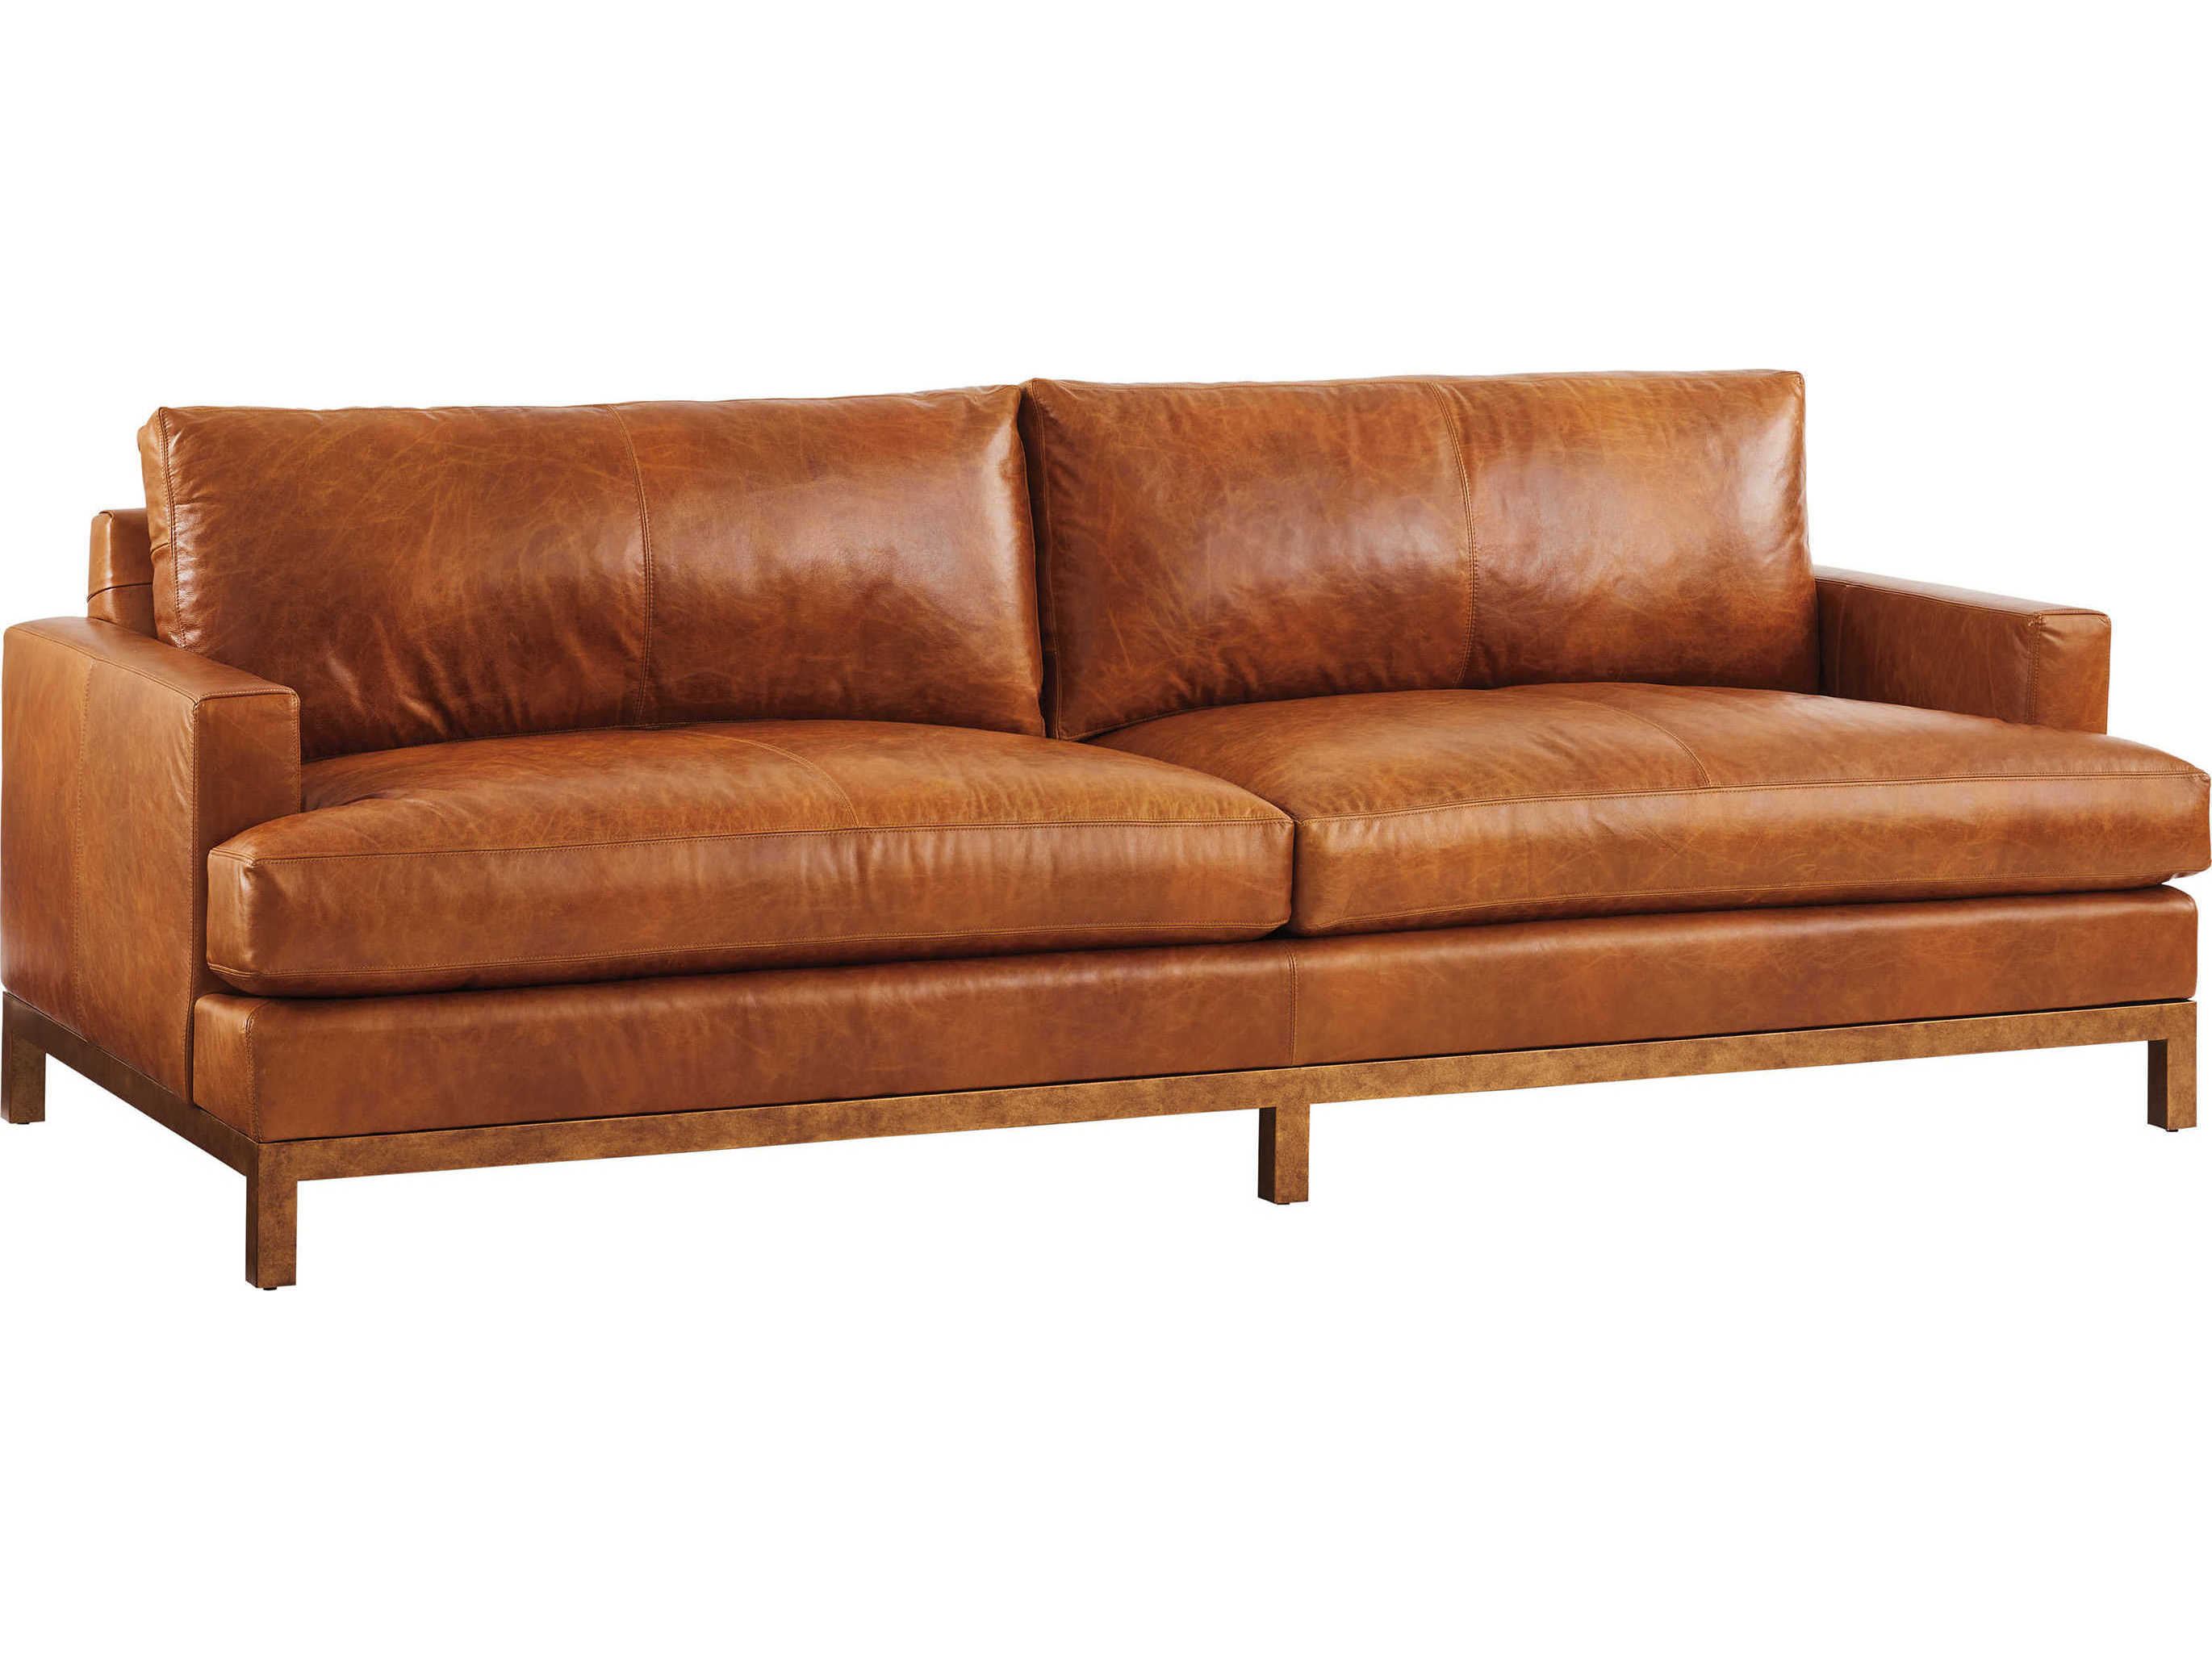 Barclay Butera Upholstery Leather Sofa